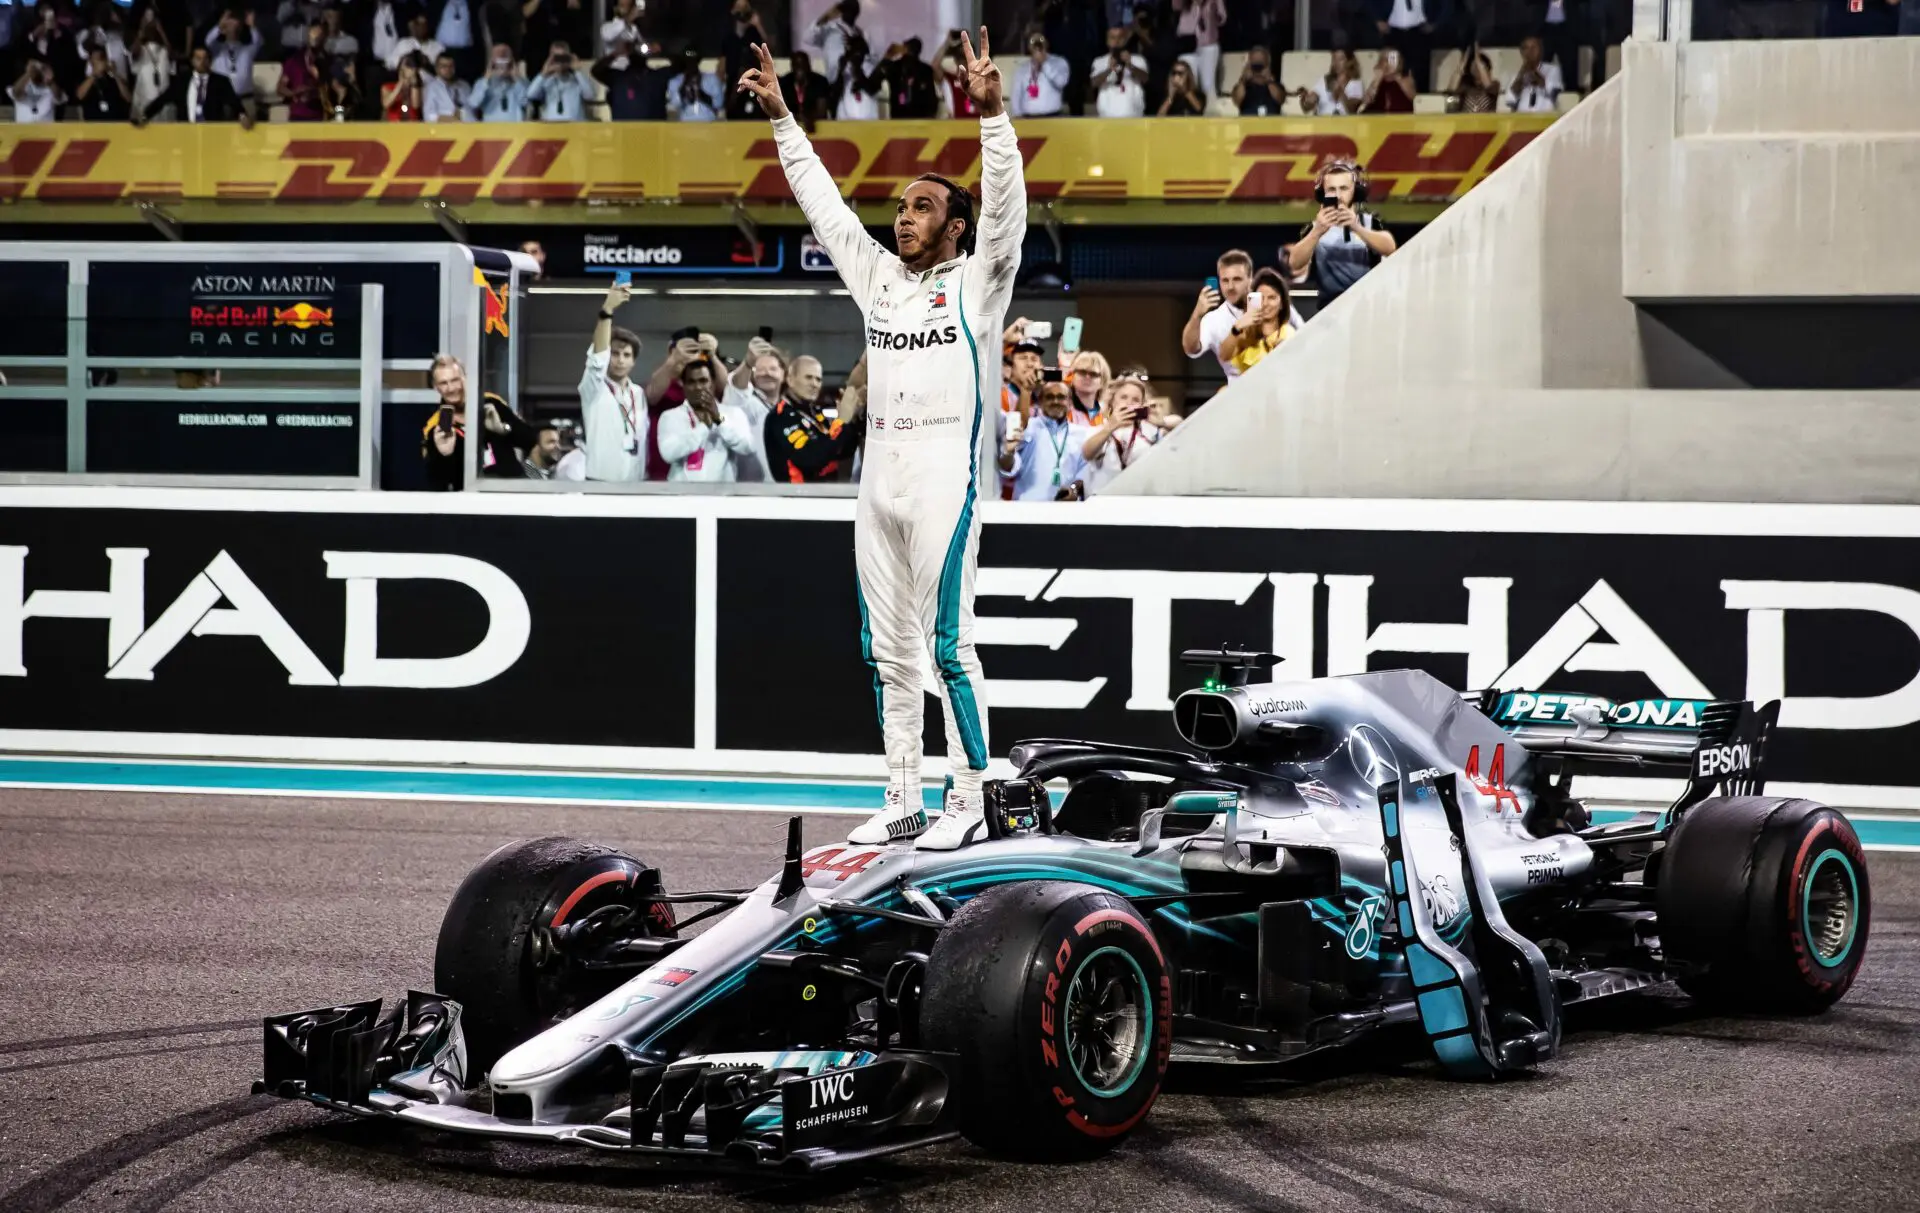 Image of Lewis Hamilton winning a grand prix race